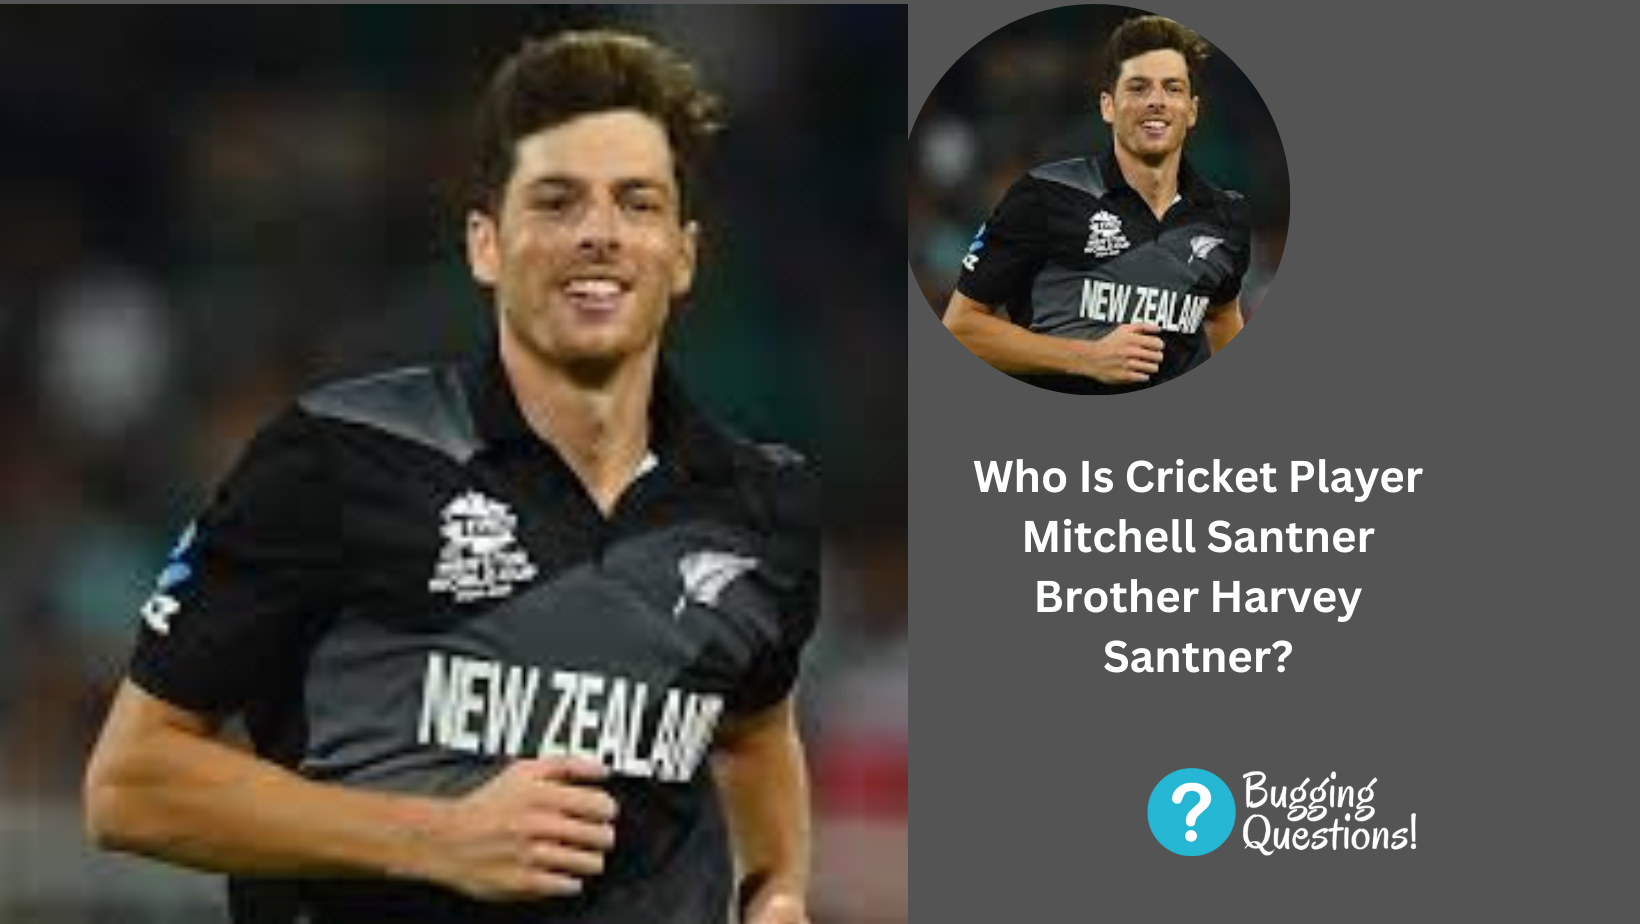 Who Is Cricket Player Mitchell Santner Brother Harvey Santner?